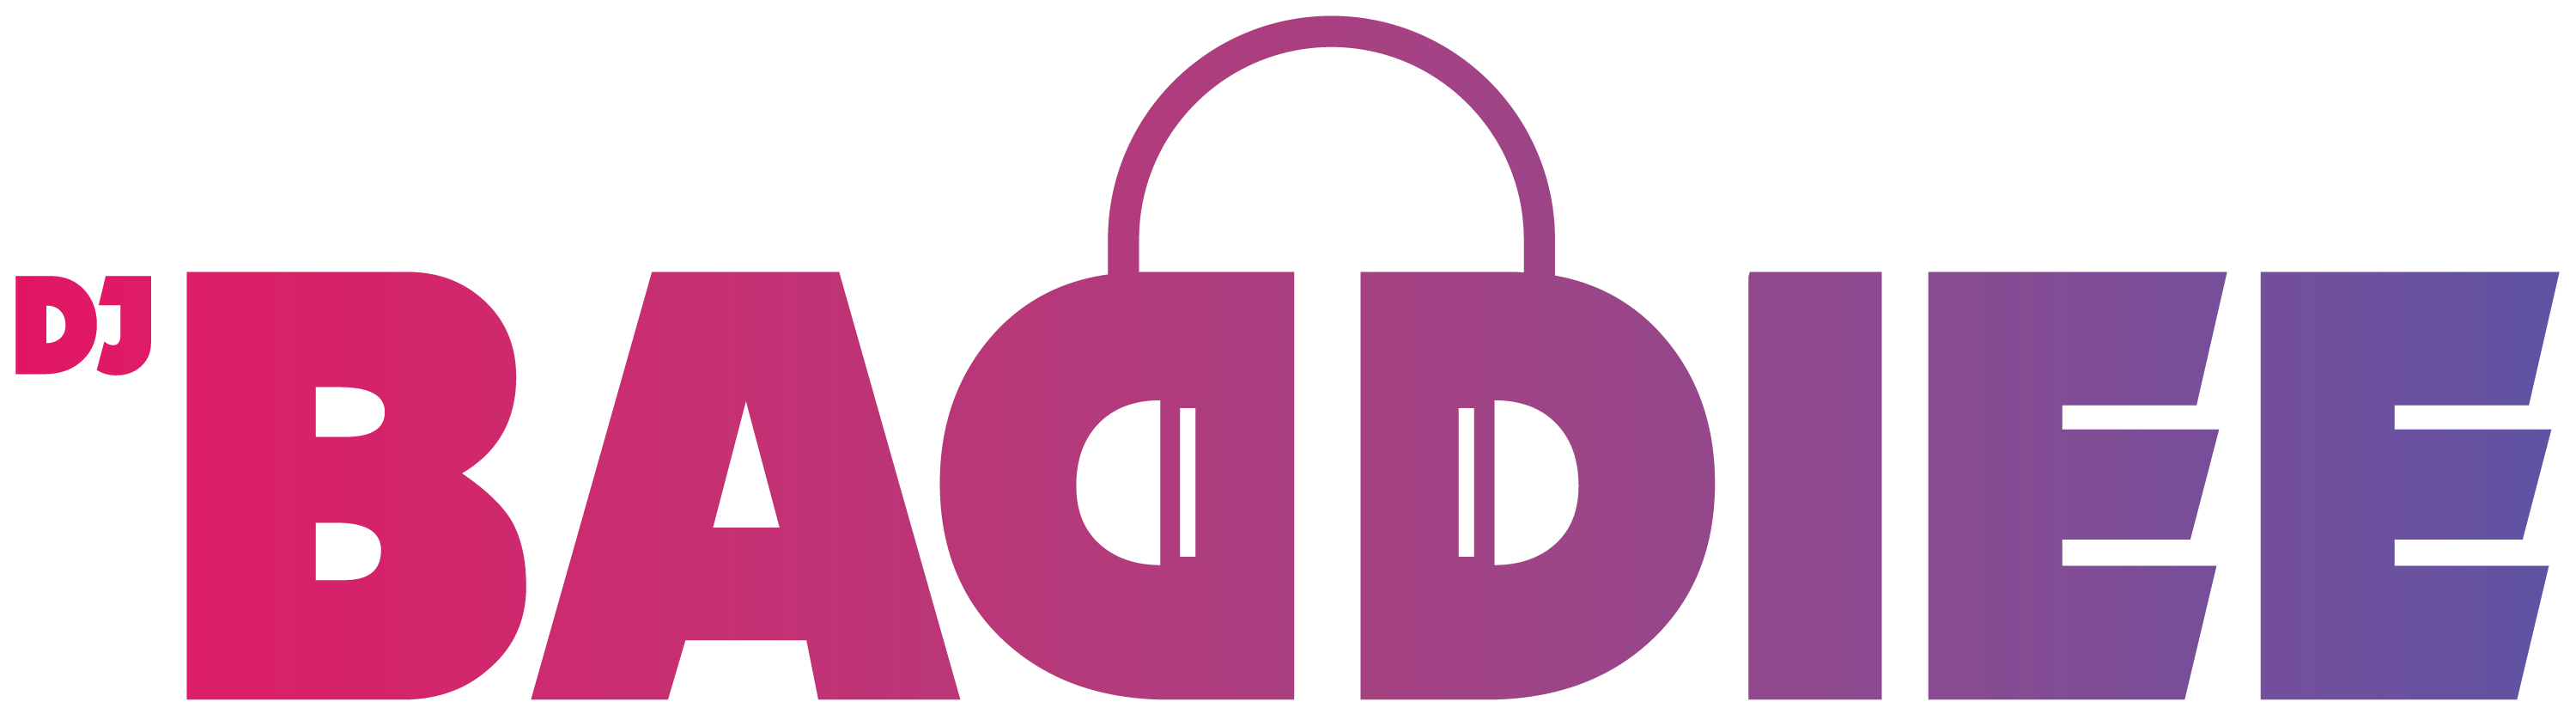 DJ Baddie Logo